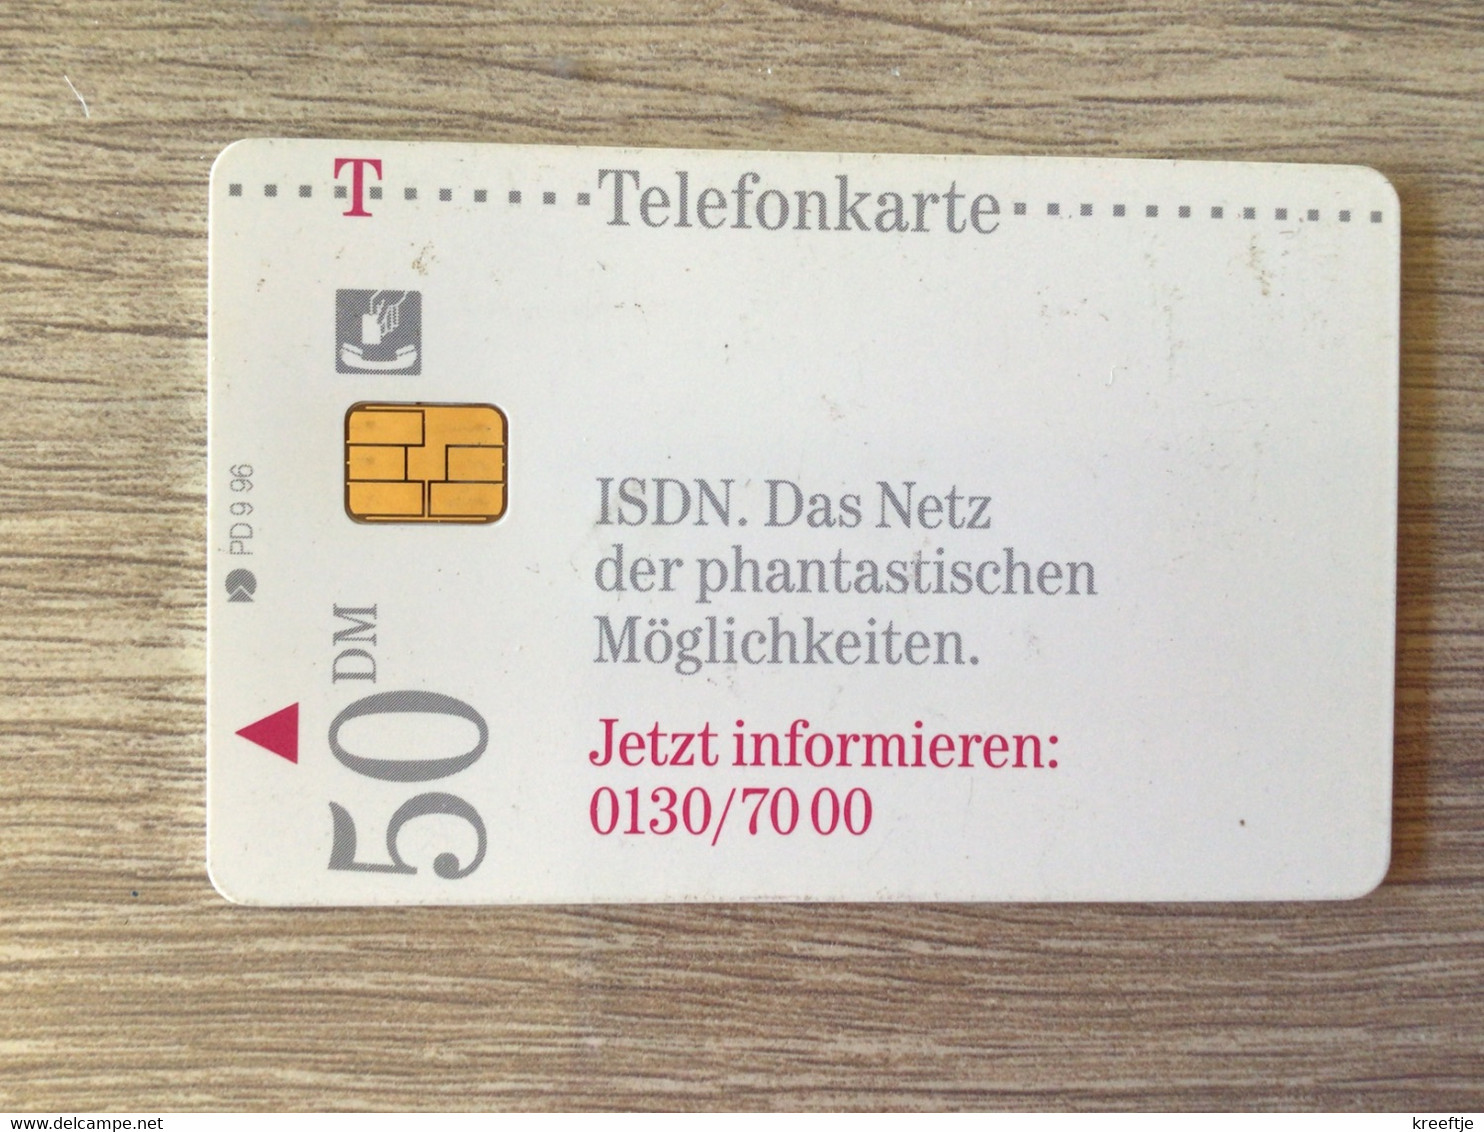 Telefoonkaart. Telefonkarte Deutsche Telekom - Precursori